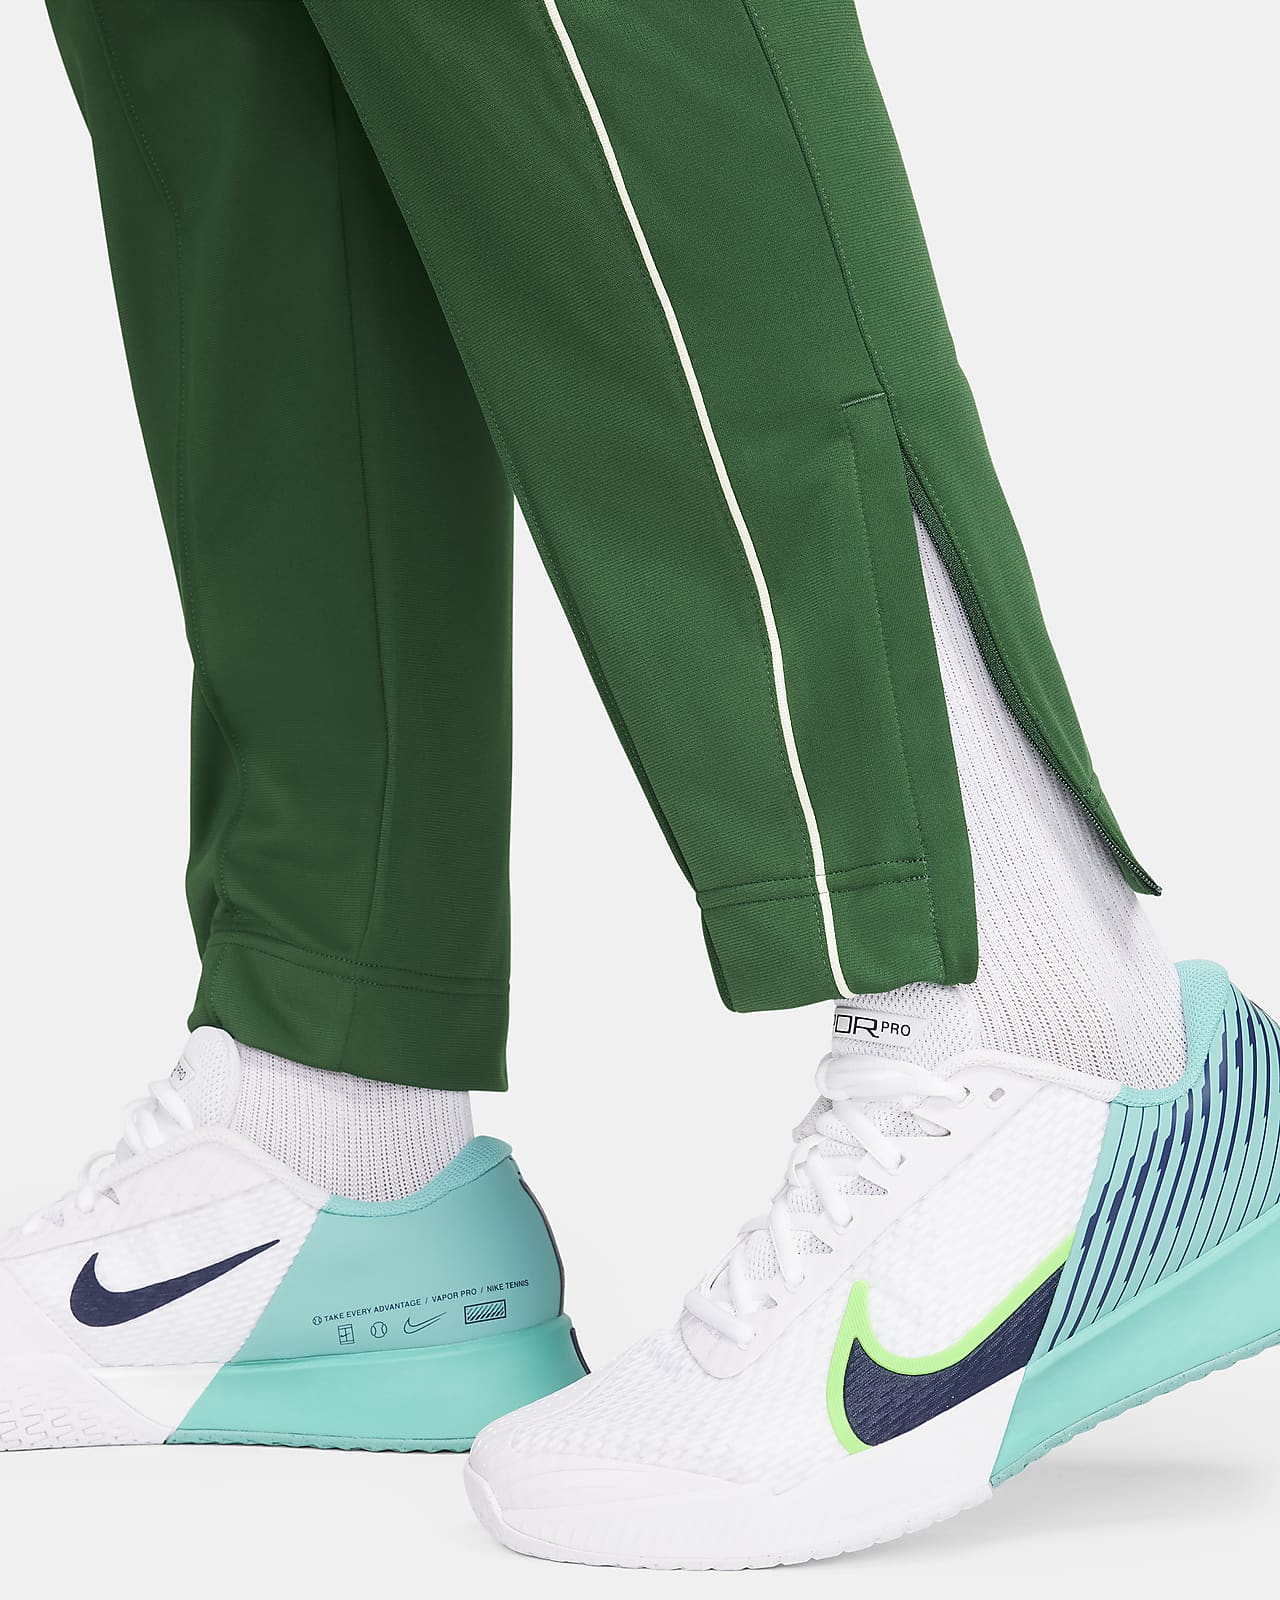 Buy NikeCourt Advantage Men's Tennis Pants Online in Kuwait - Intersport